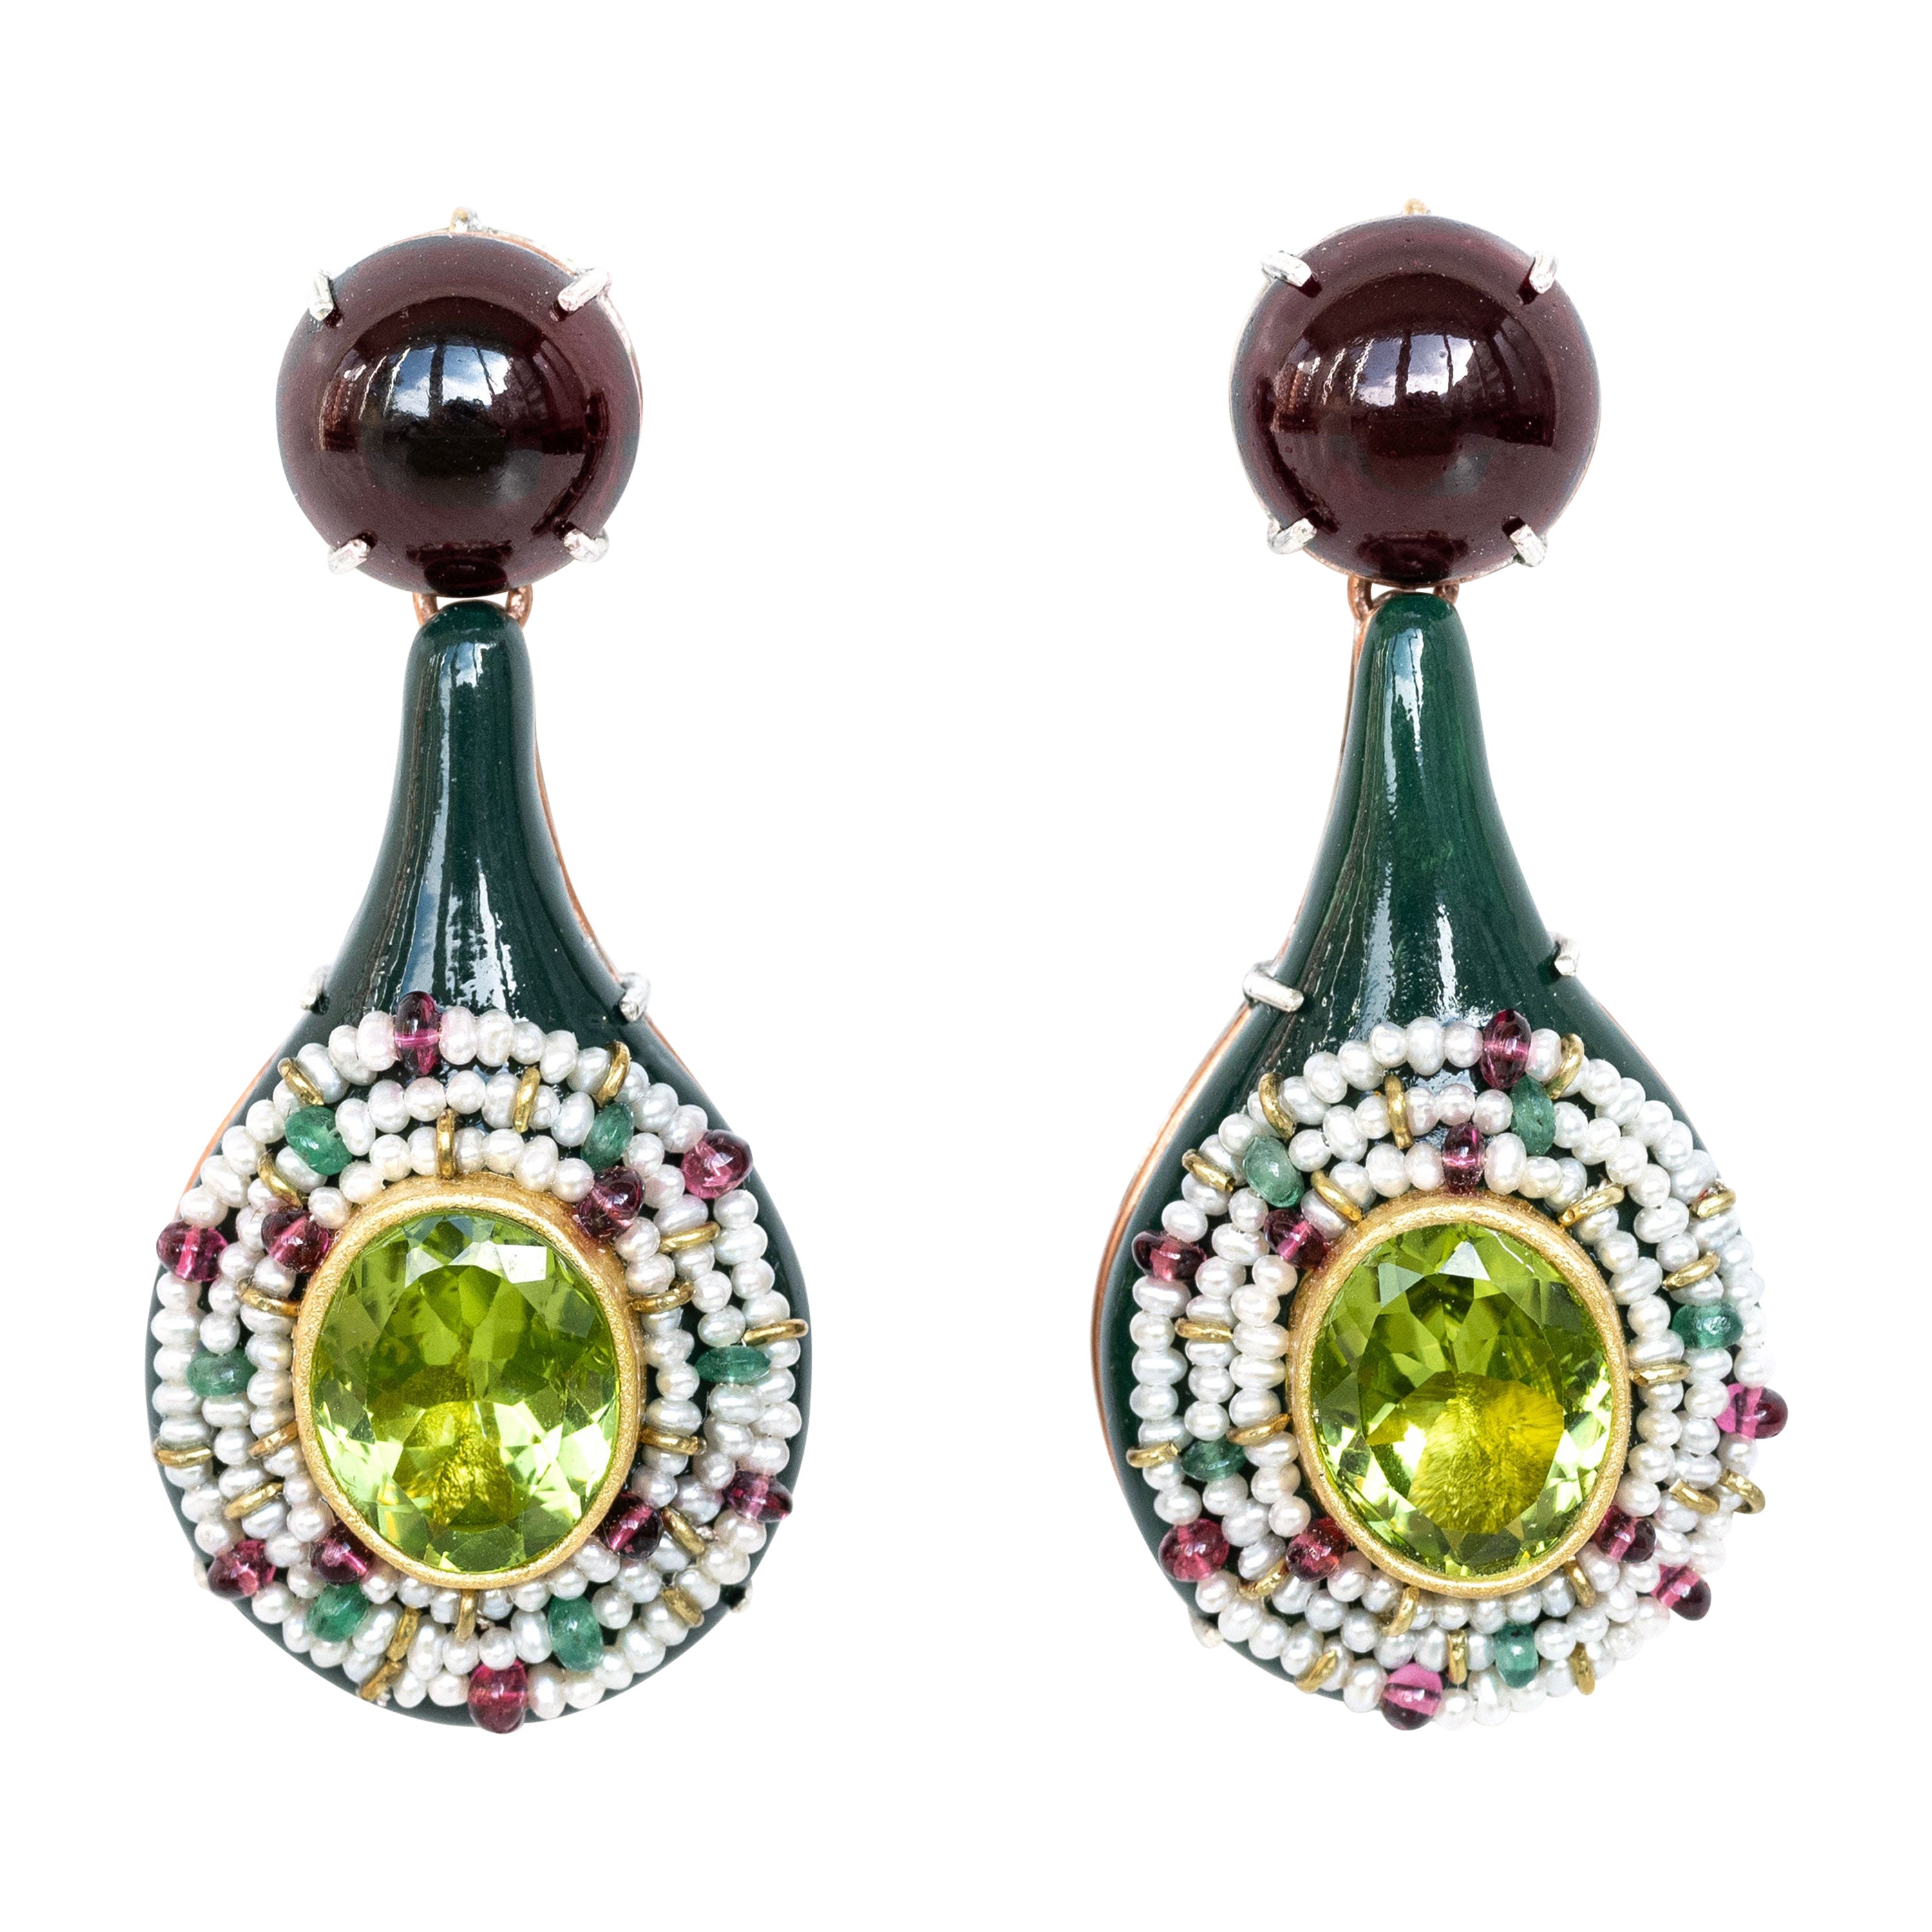 Green Bodyfurnitures Earrings, Peridots, Garnets, Rubelites, Emeralds, Pearls